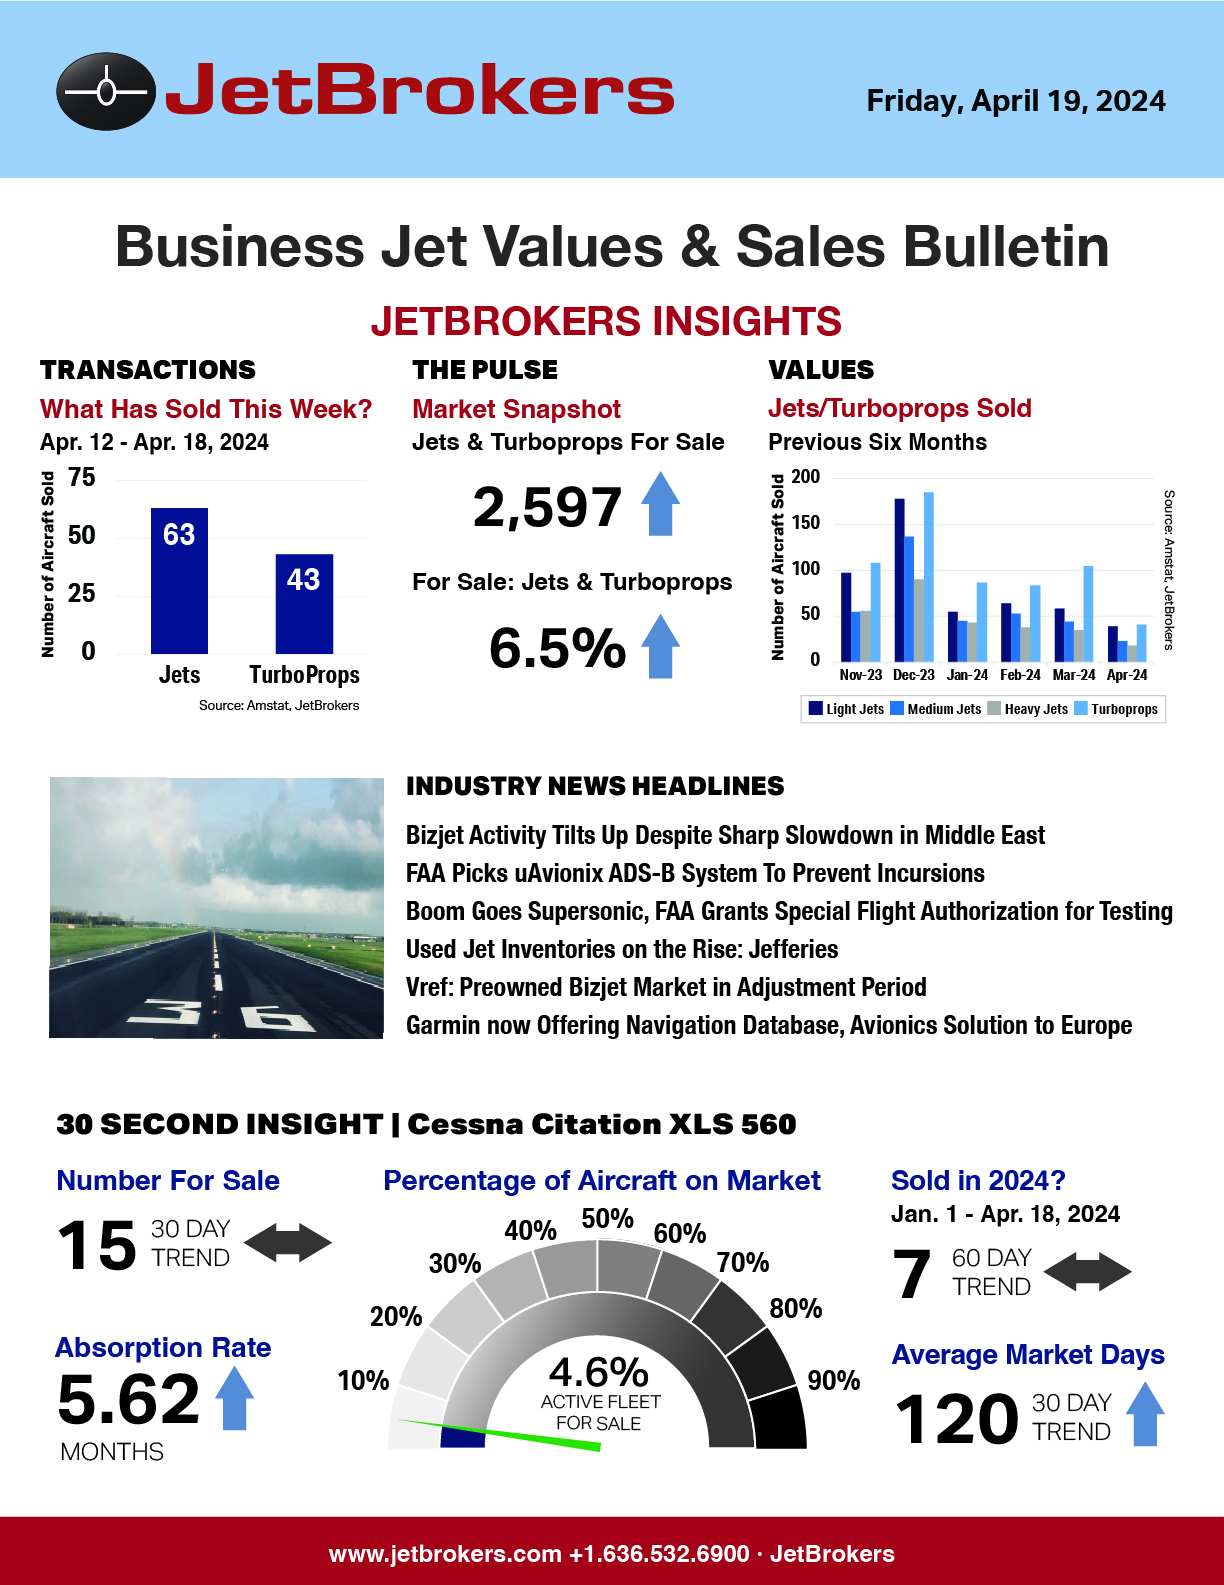 JetBrokers Business Jet Values & Sales Bulletin - April 19, 2024